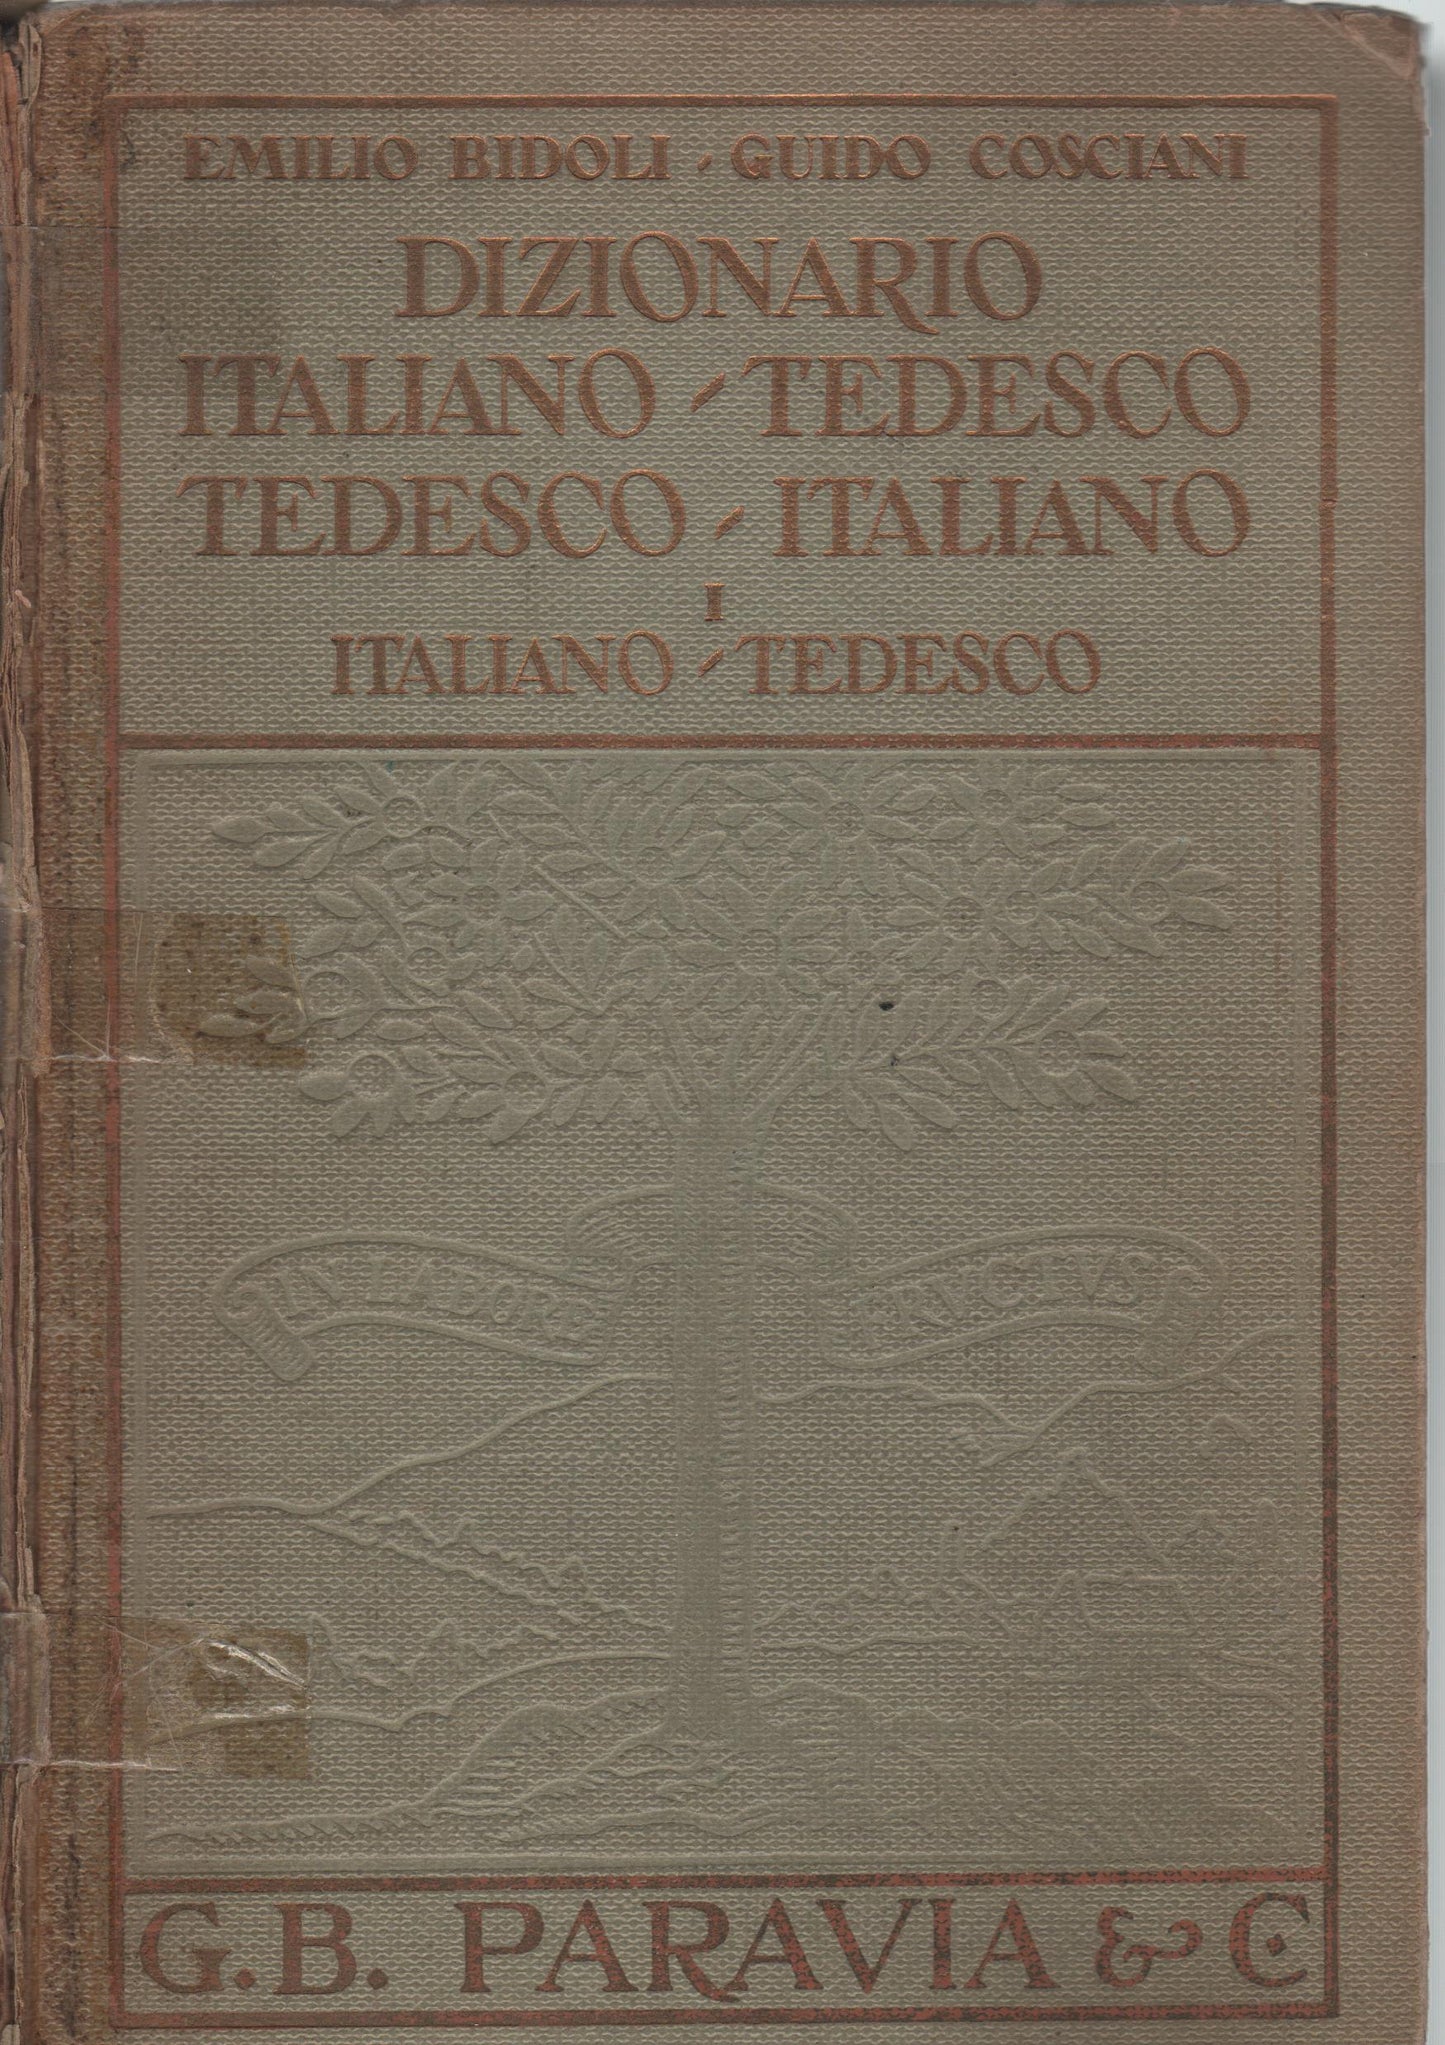 Dizionario italiano-tedesco/tedesco-italiano 2 volumi